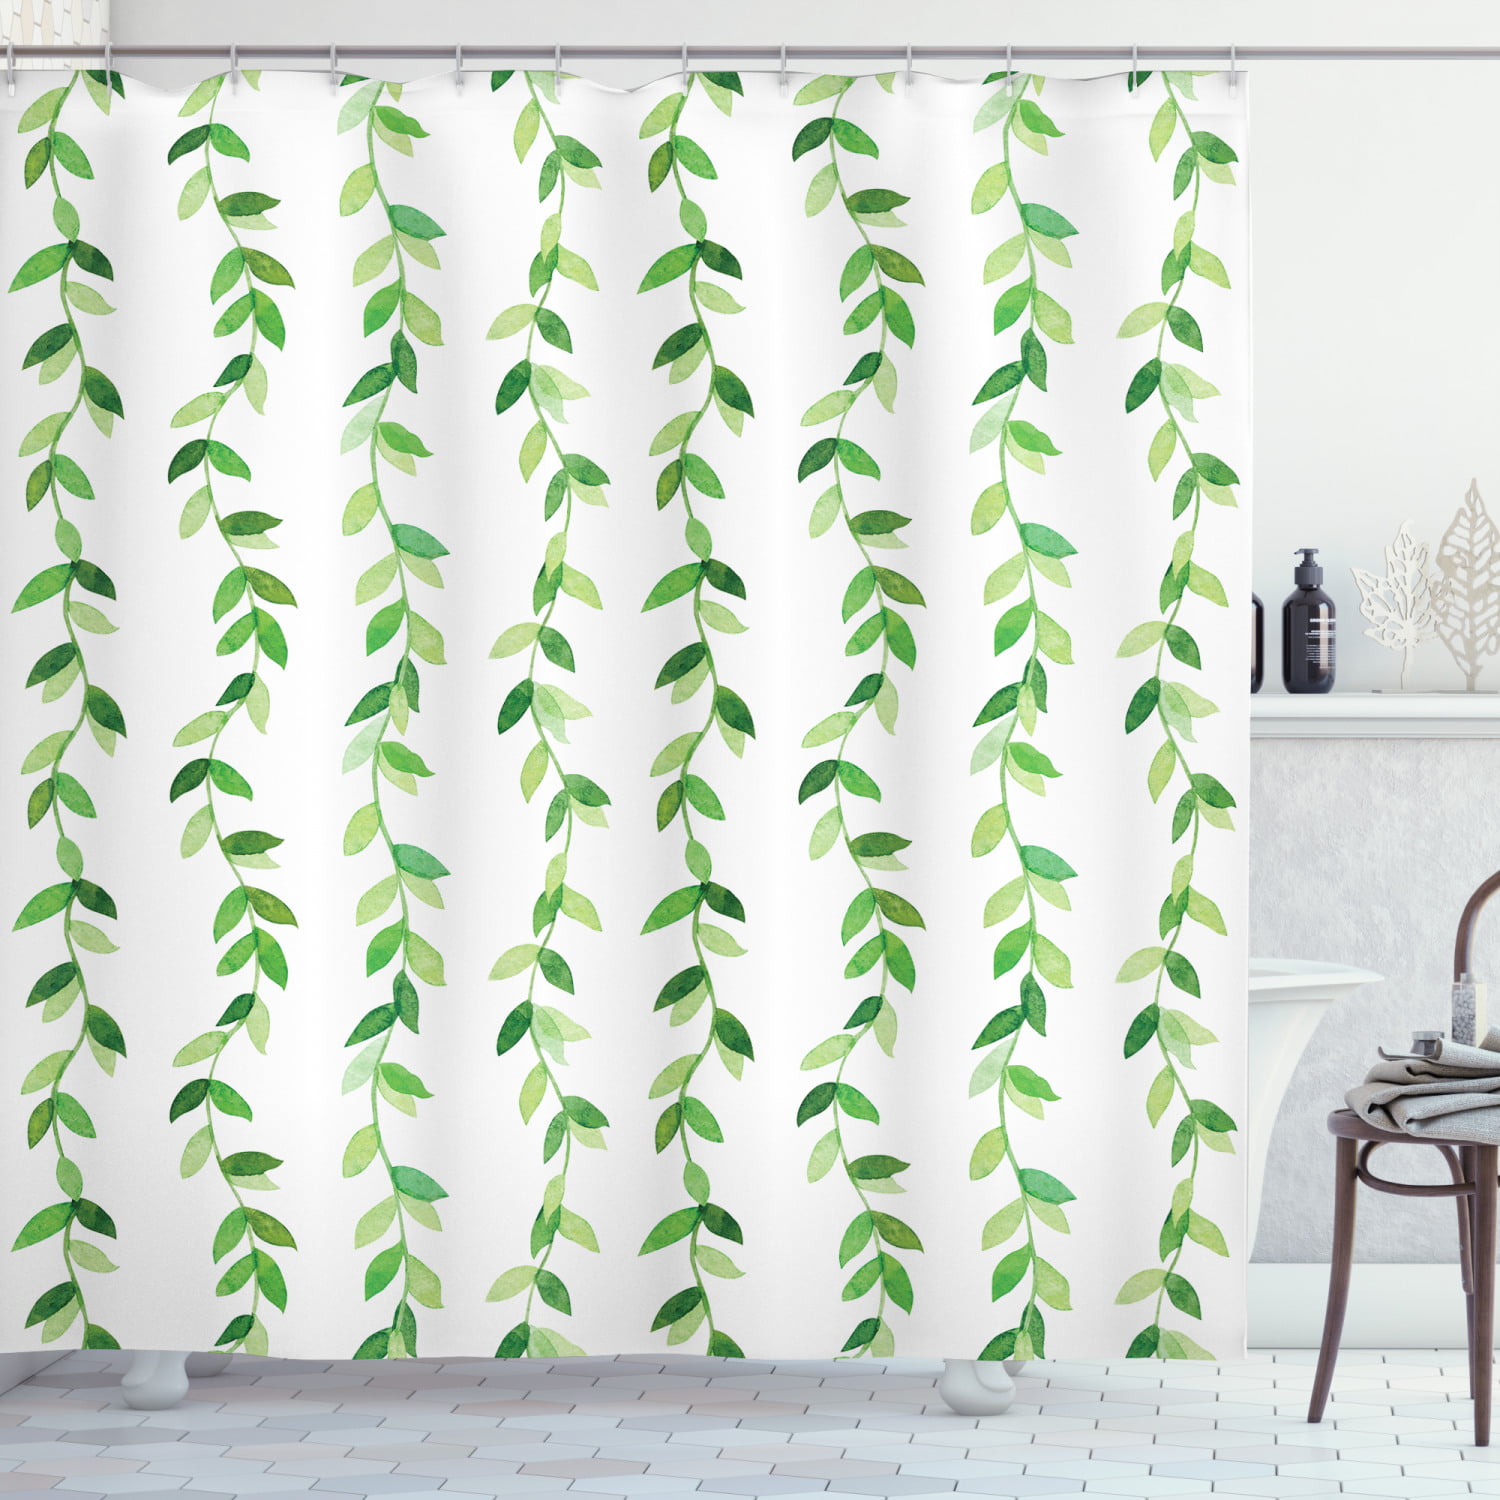 Ivy Green Leaves Wall Pattern Bathroom Waterproof Fabric Shower Curtain Hooks 